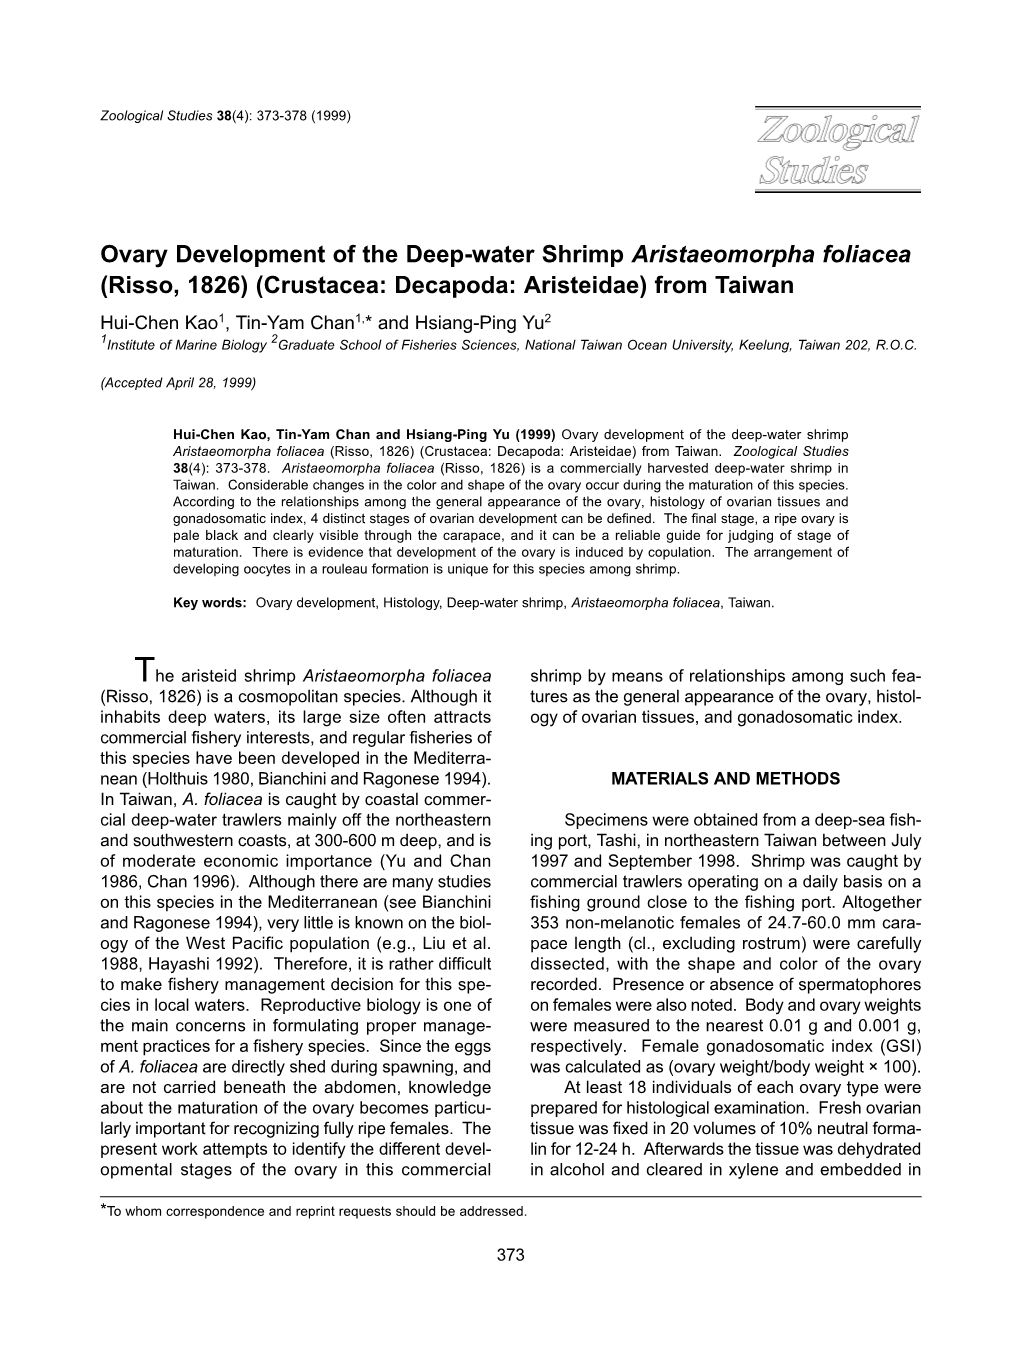 Ovary Development of the Deep-Water Shrimp Aristaeomorpha Foliacea